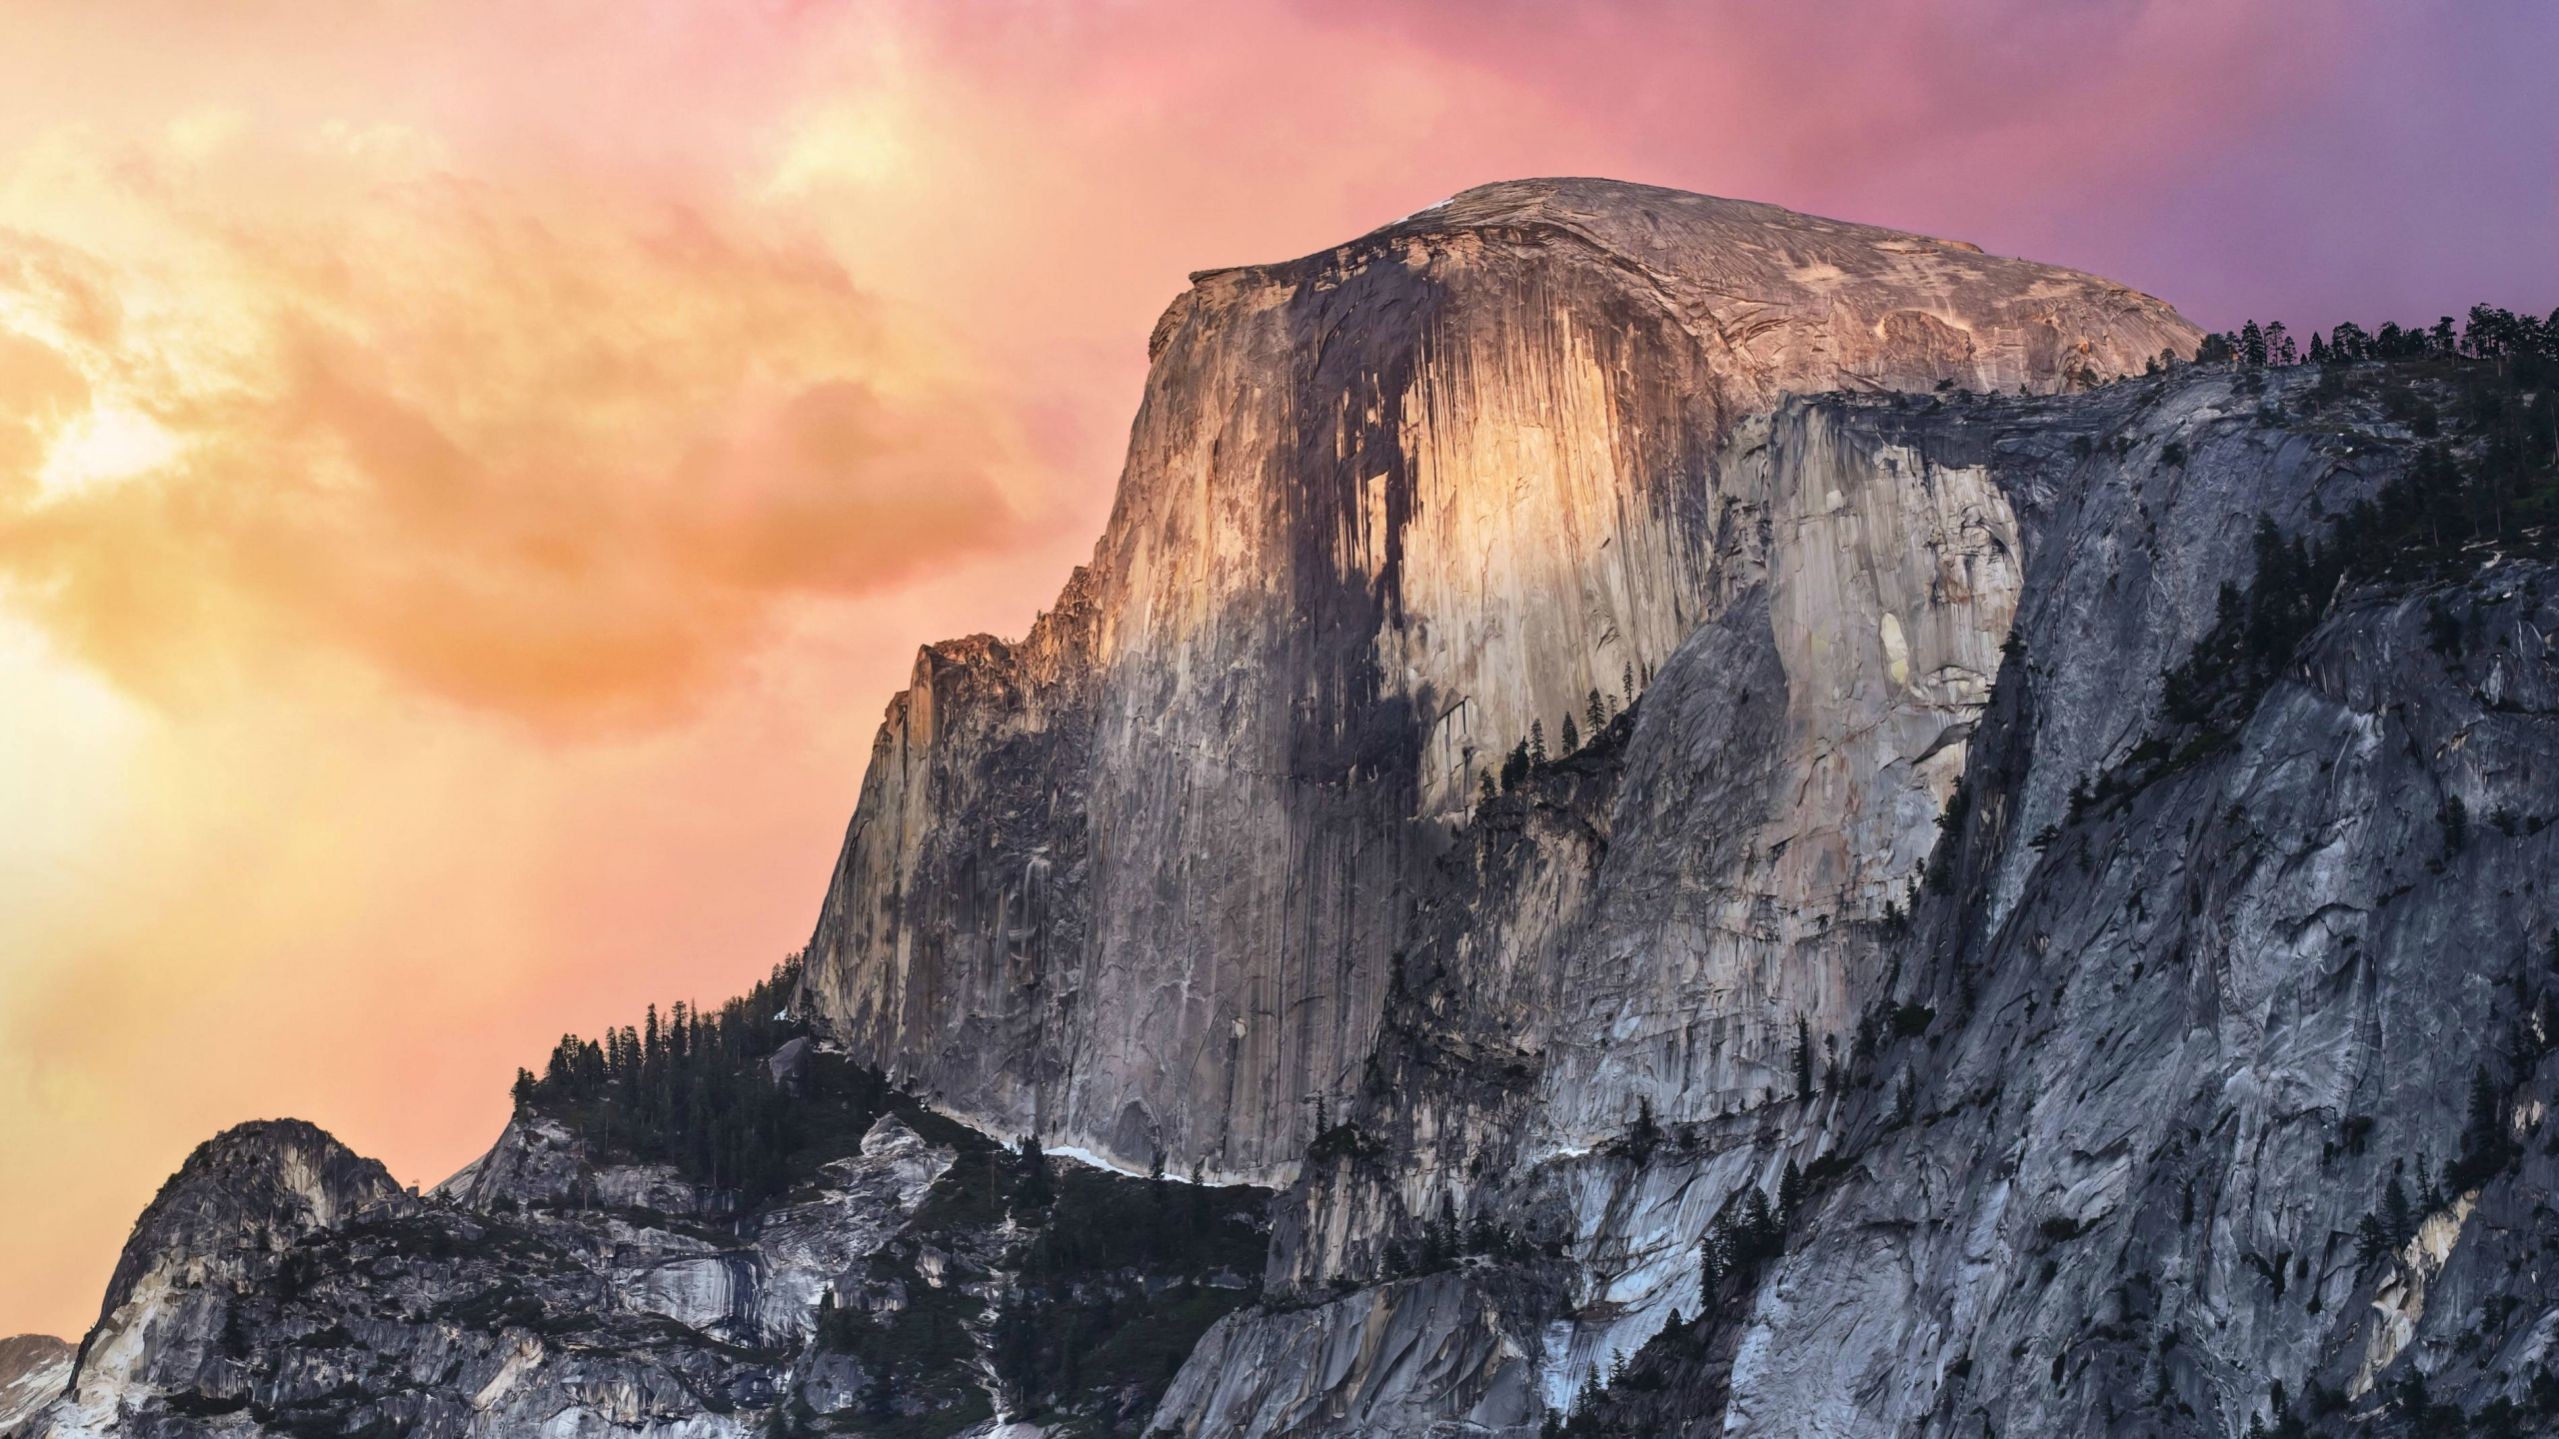 General 2559x1439 mountains nature Yosemite National Park cliff purple sky USA rocks rock formation Half Dome California